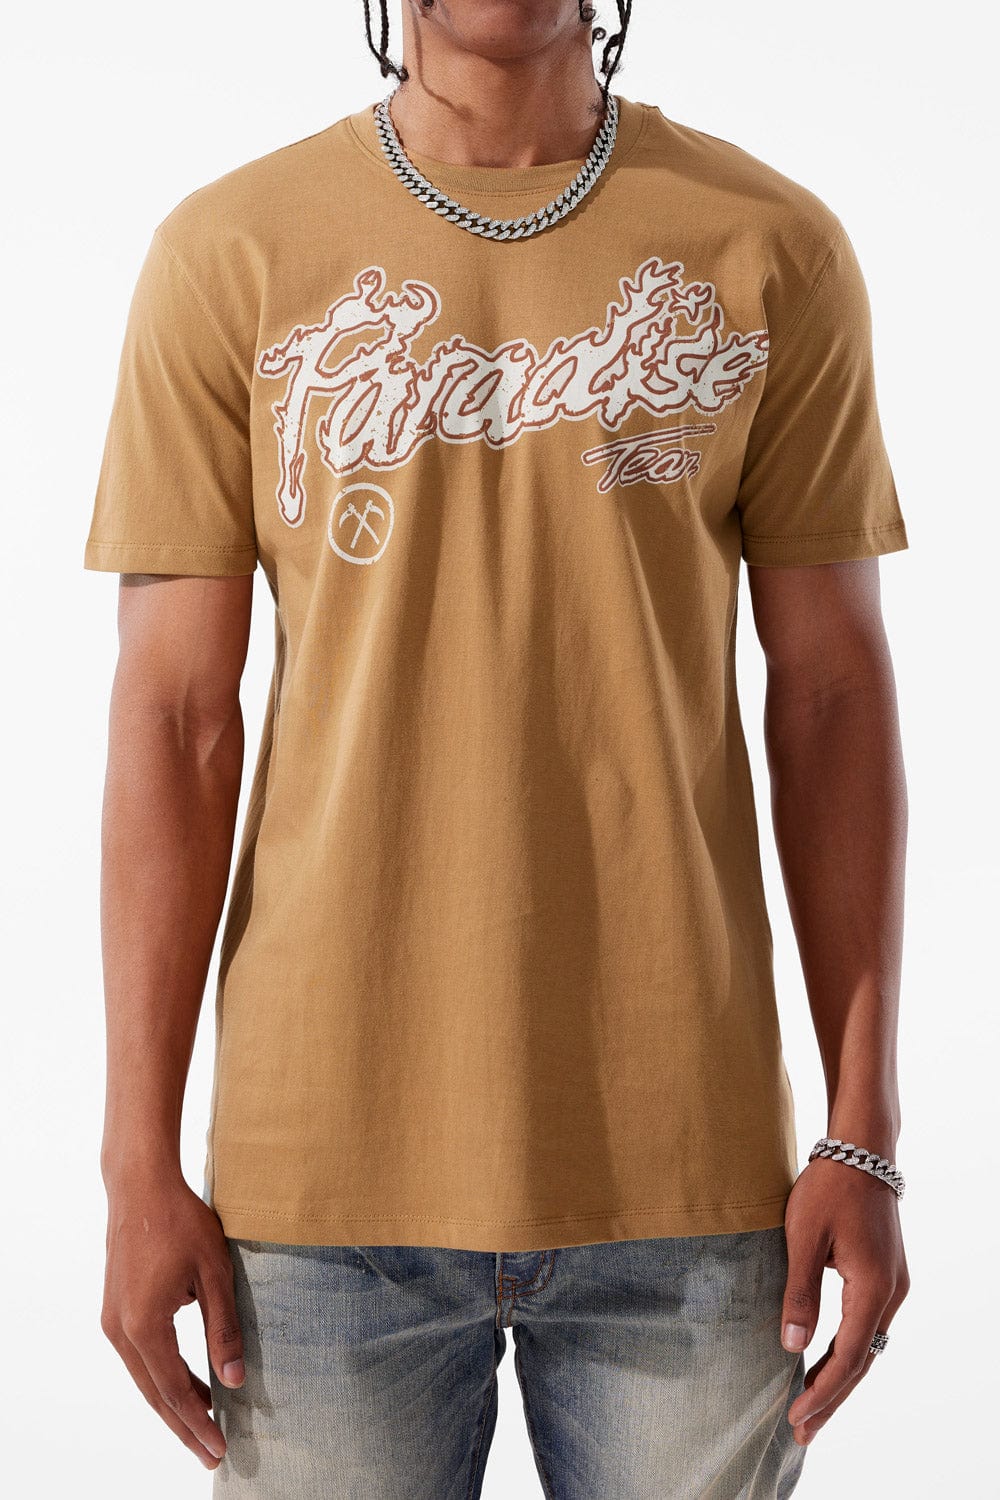 Jordan Craig Paradise Tour T-Shirt Mocha / S